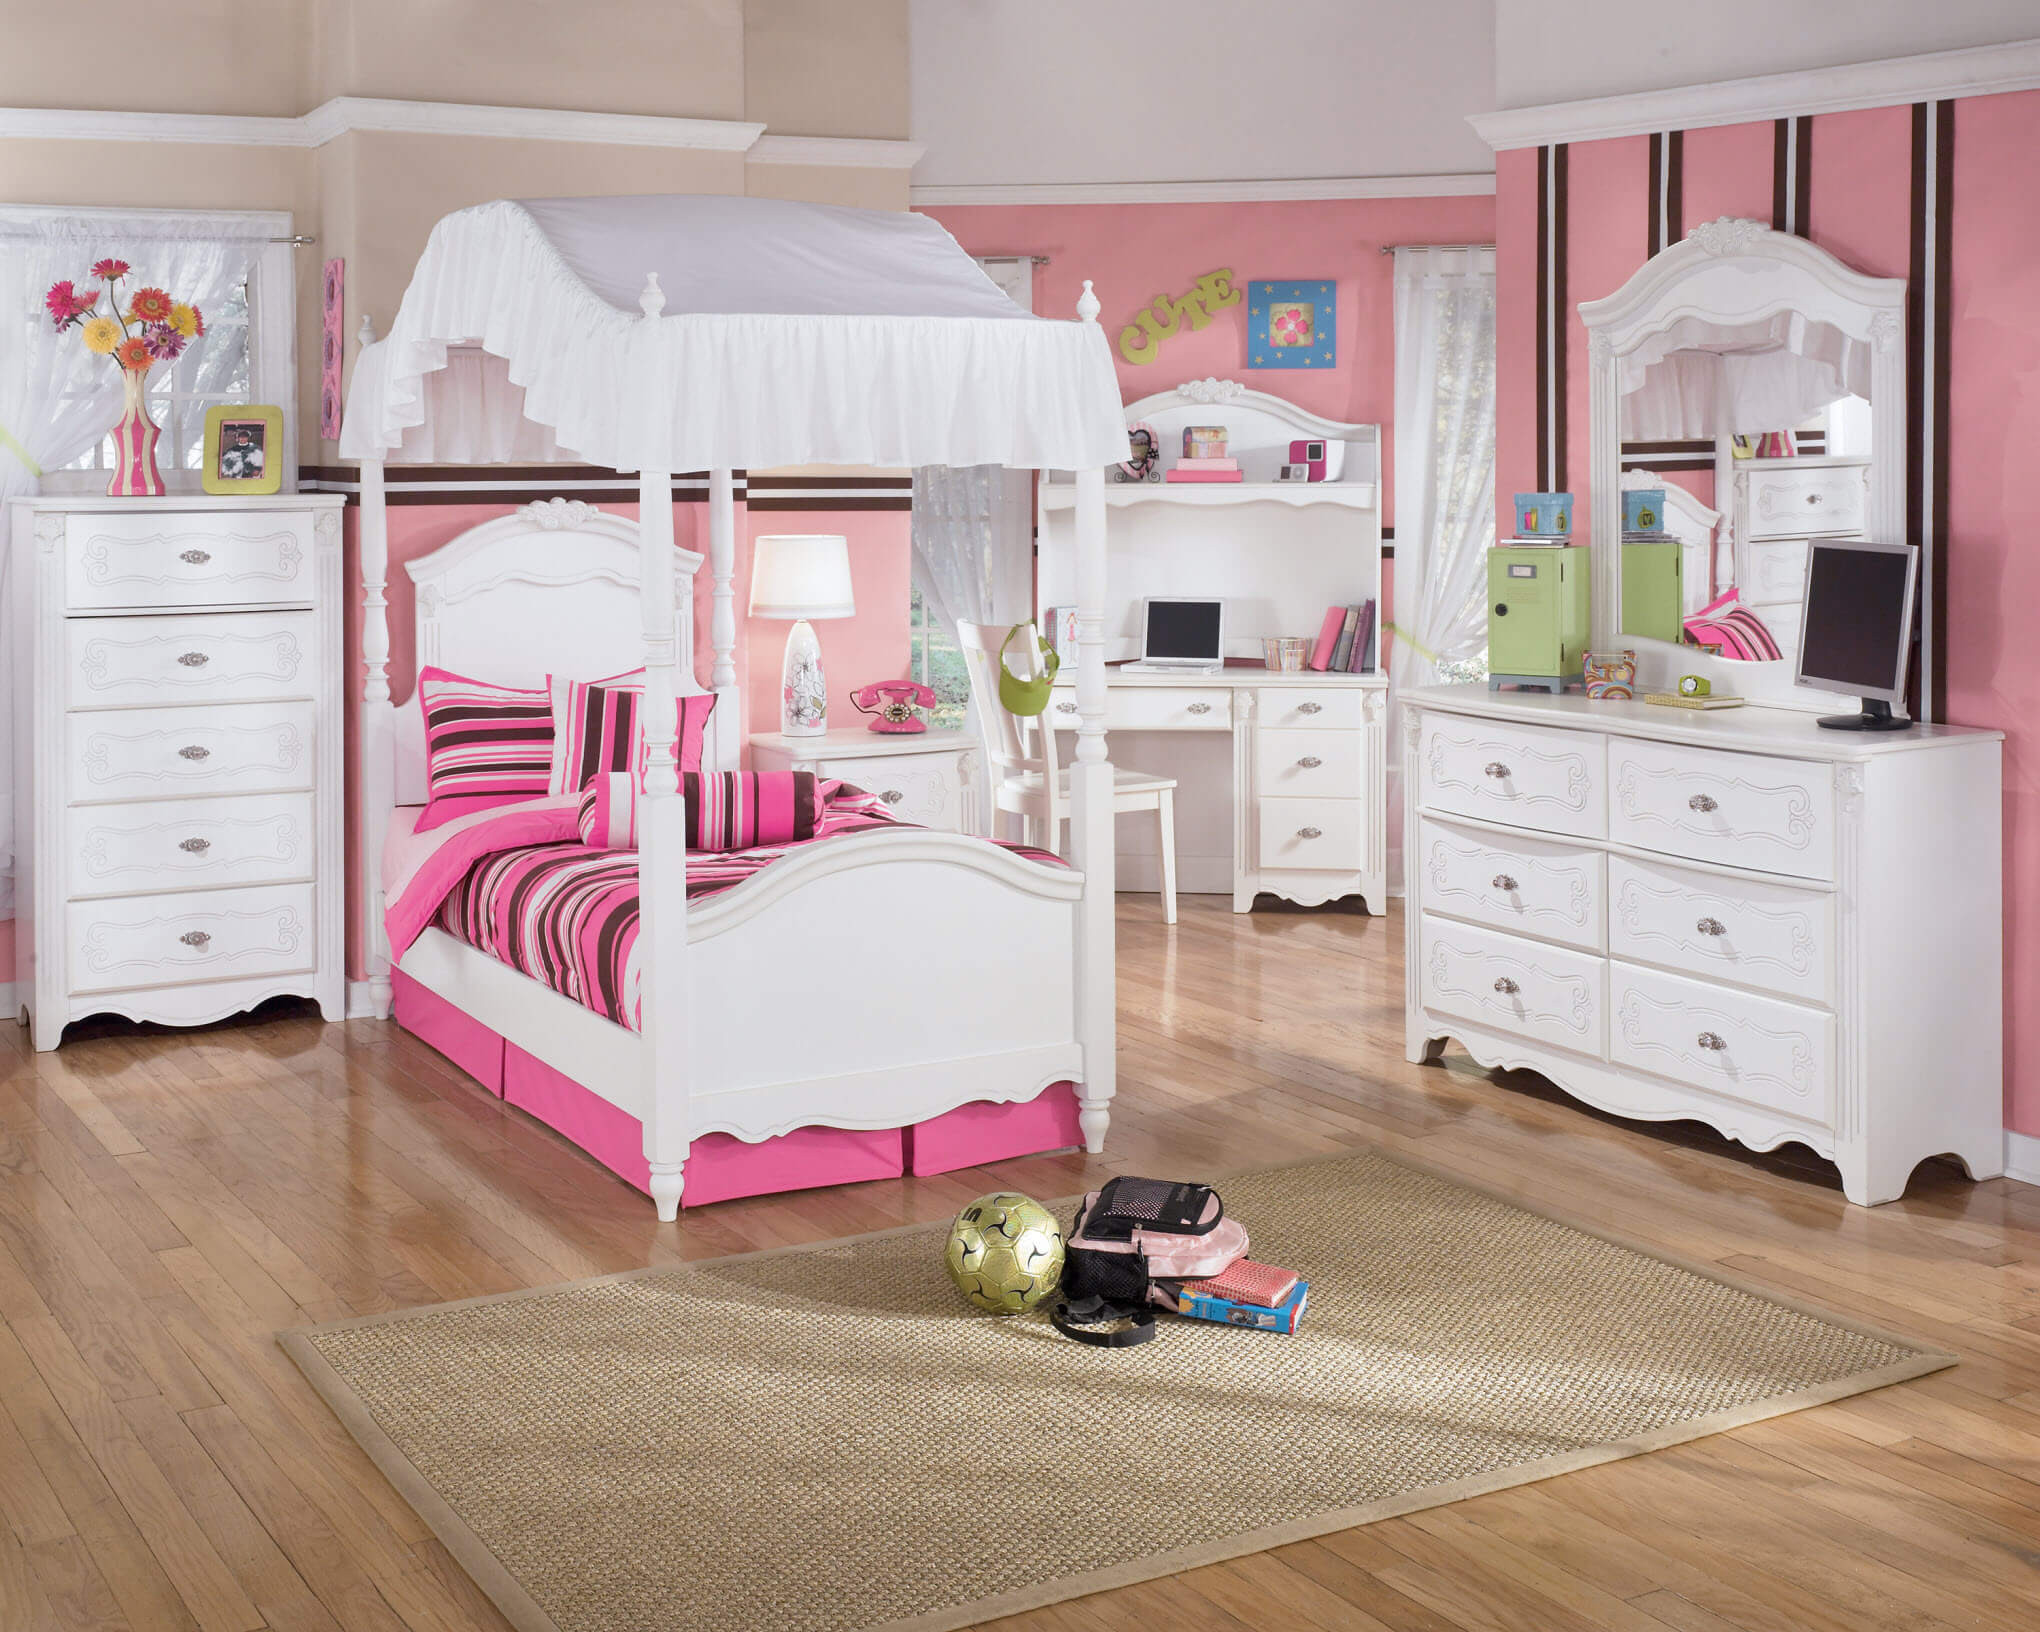 Girls Bedroom Furnature Fresh 25 Romantic and Modern Ideas for Girls Bedroom Sets